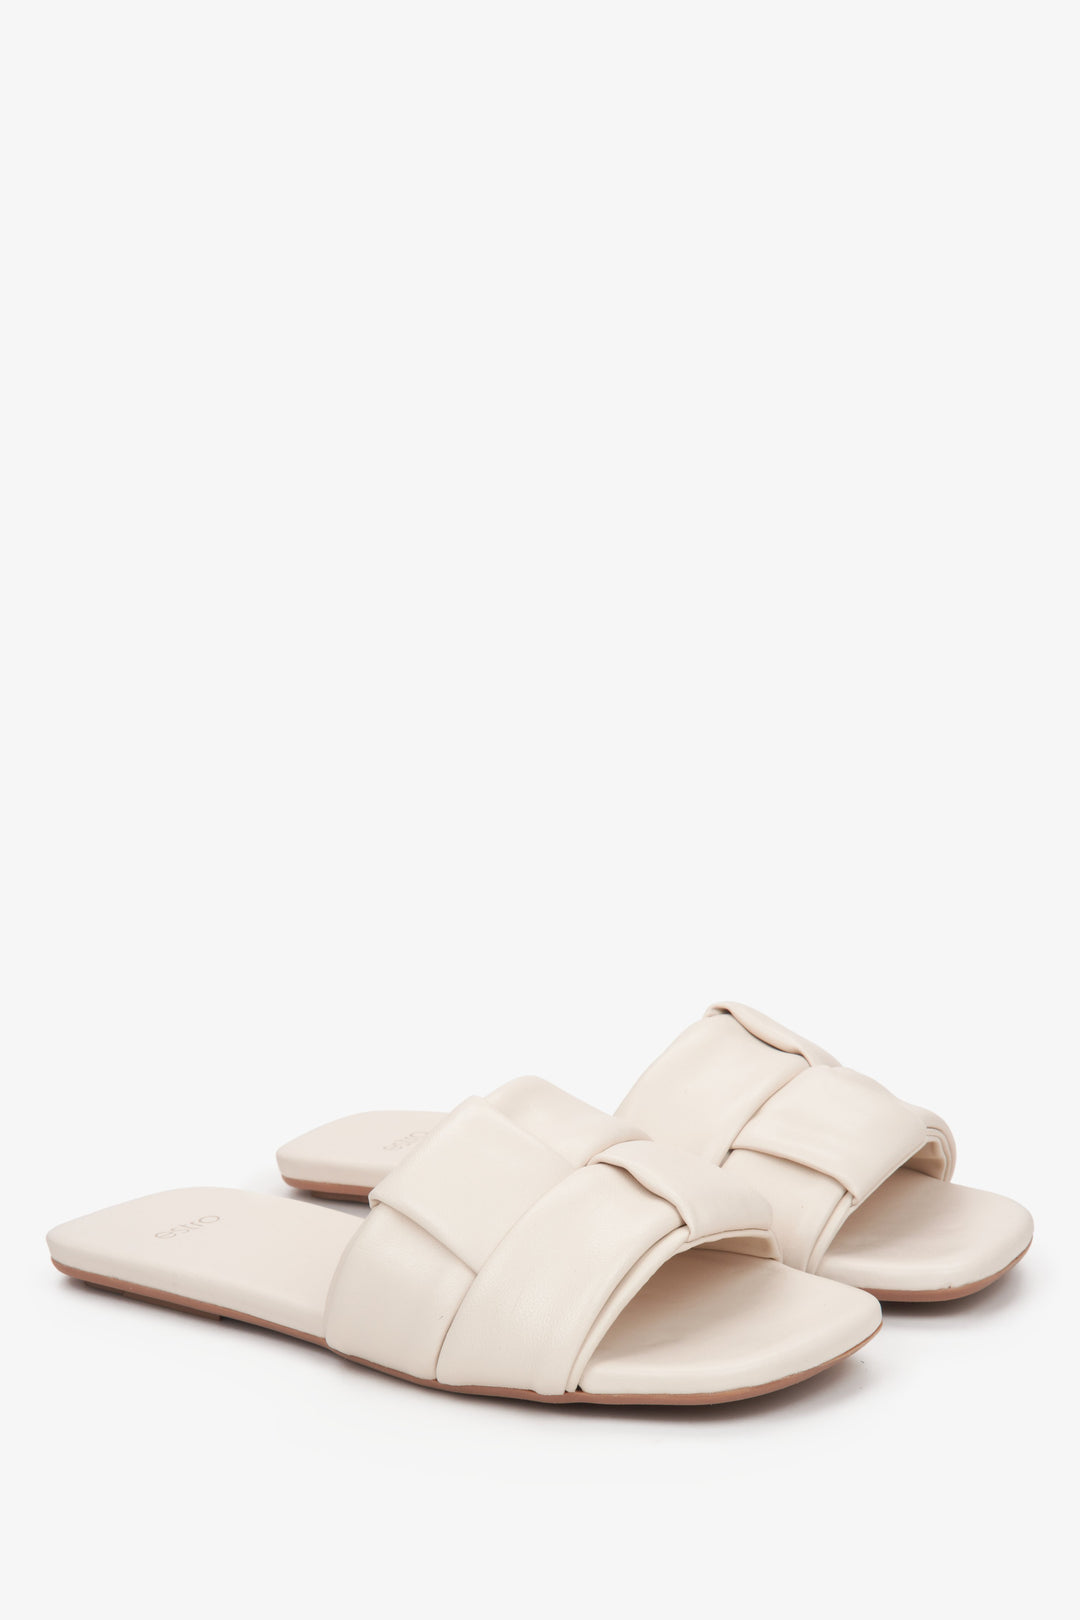 Estro Women's Slide Sandals in Light Beige Patch Leather